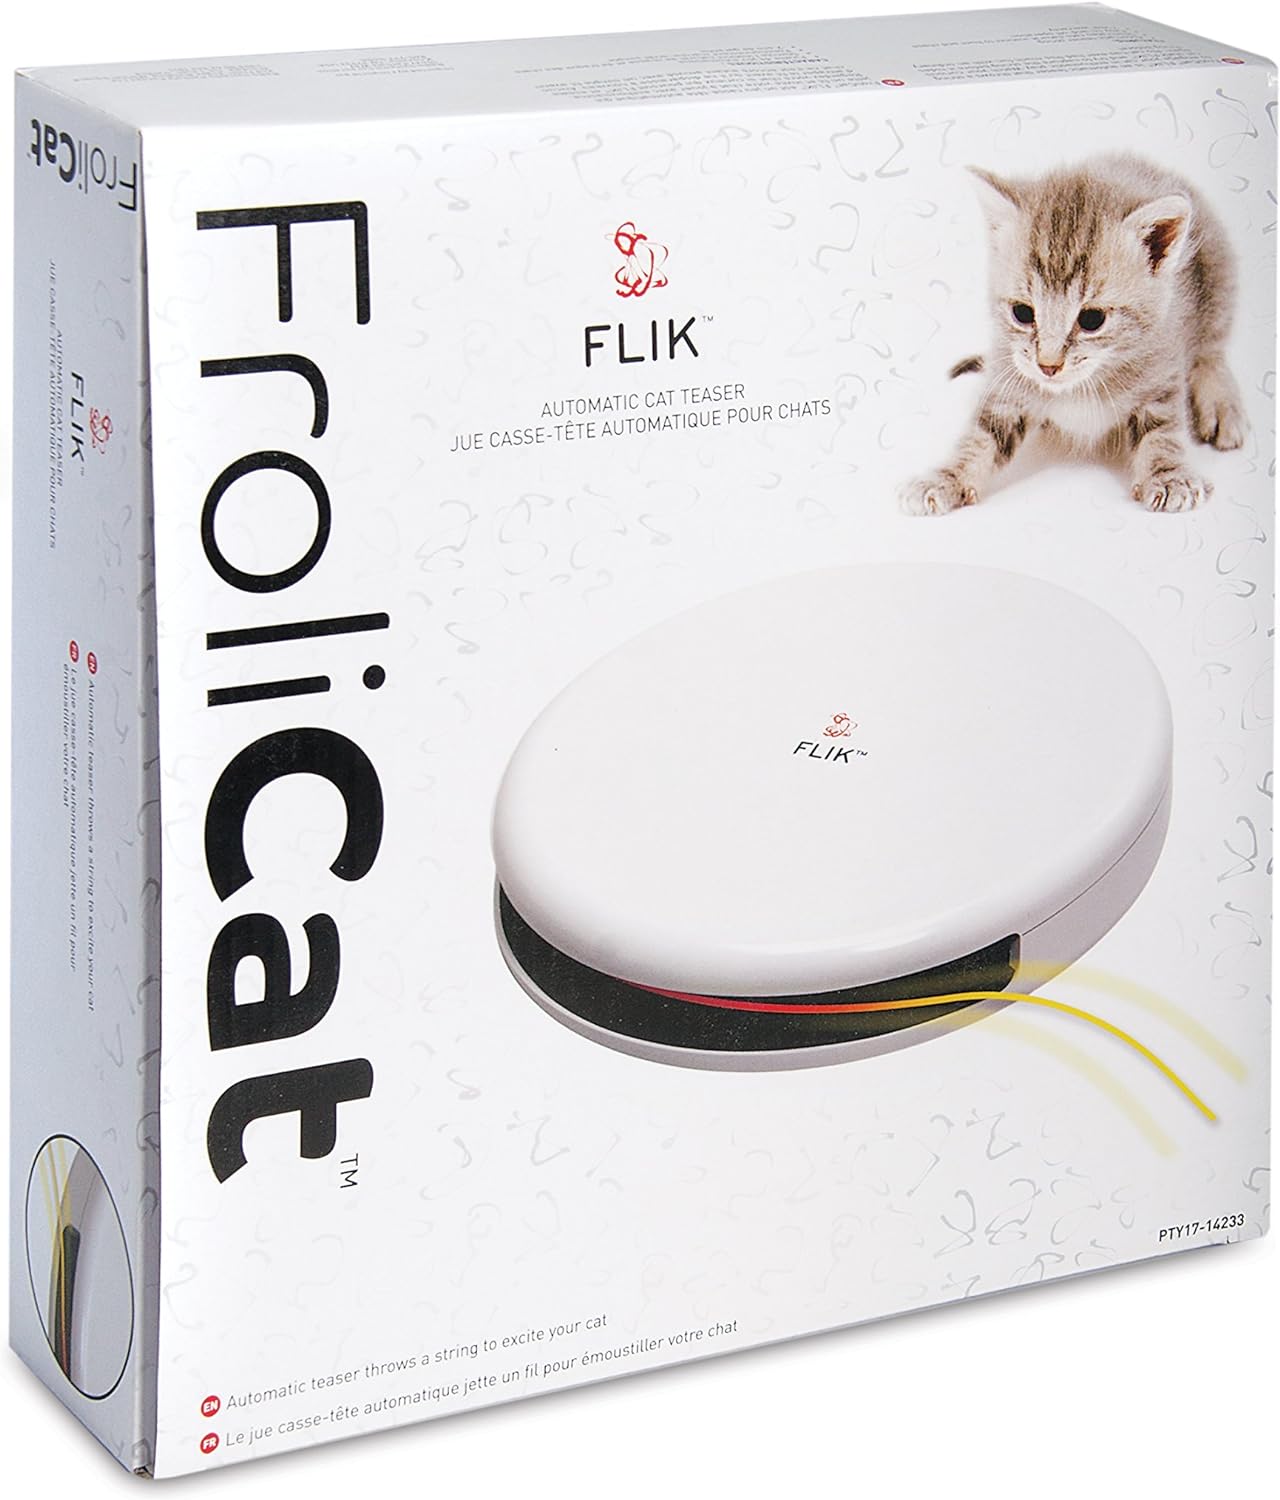 Pet Safe FroliCat Flik Automatic Cat Teaser